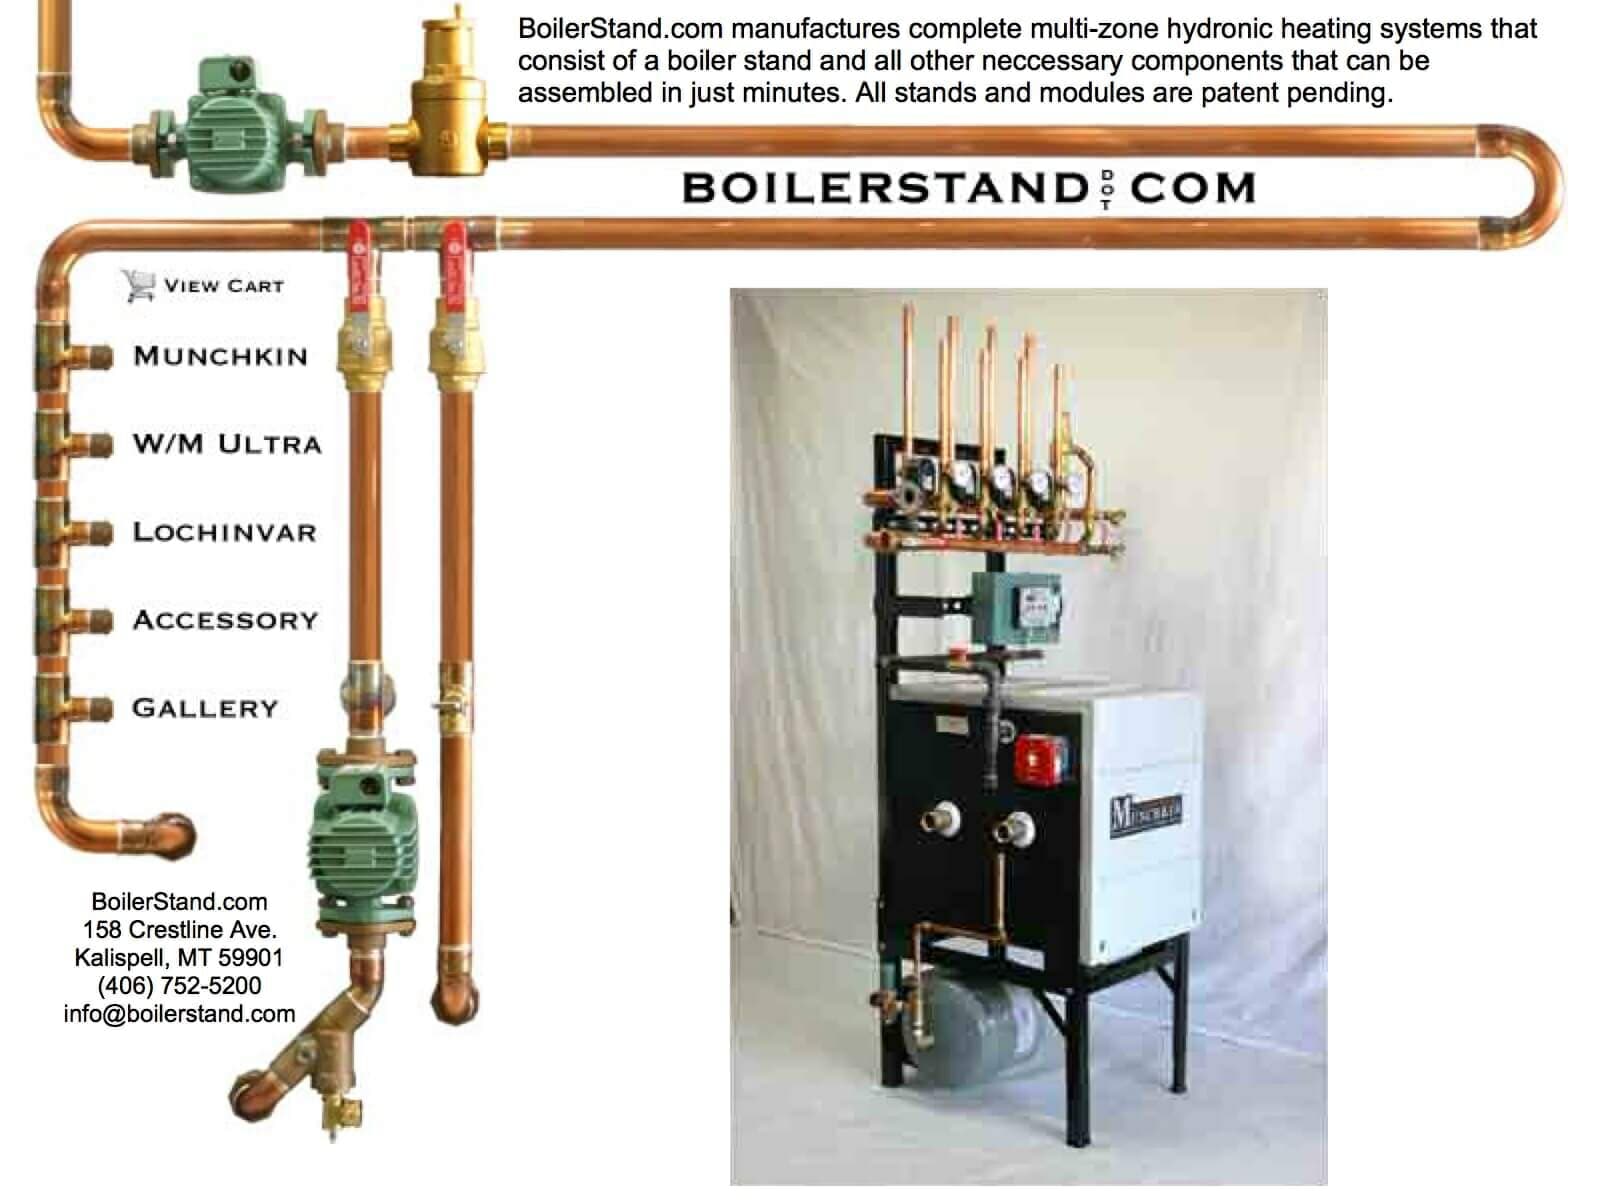 BoilerStand